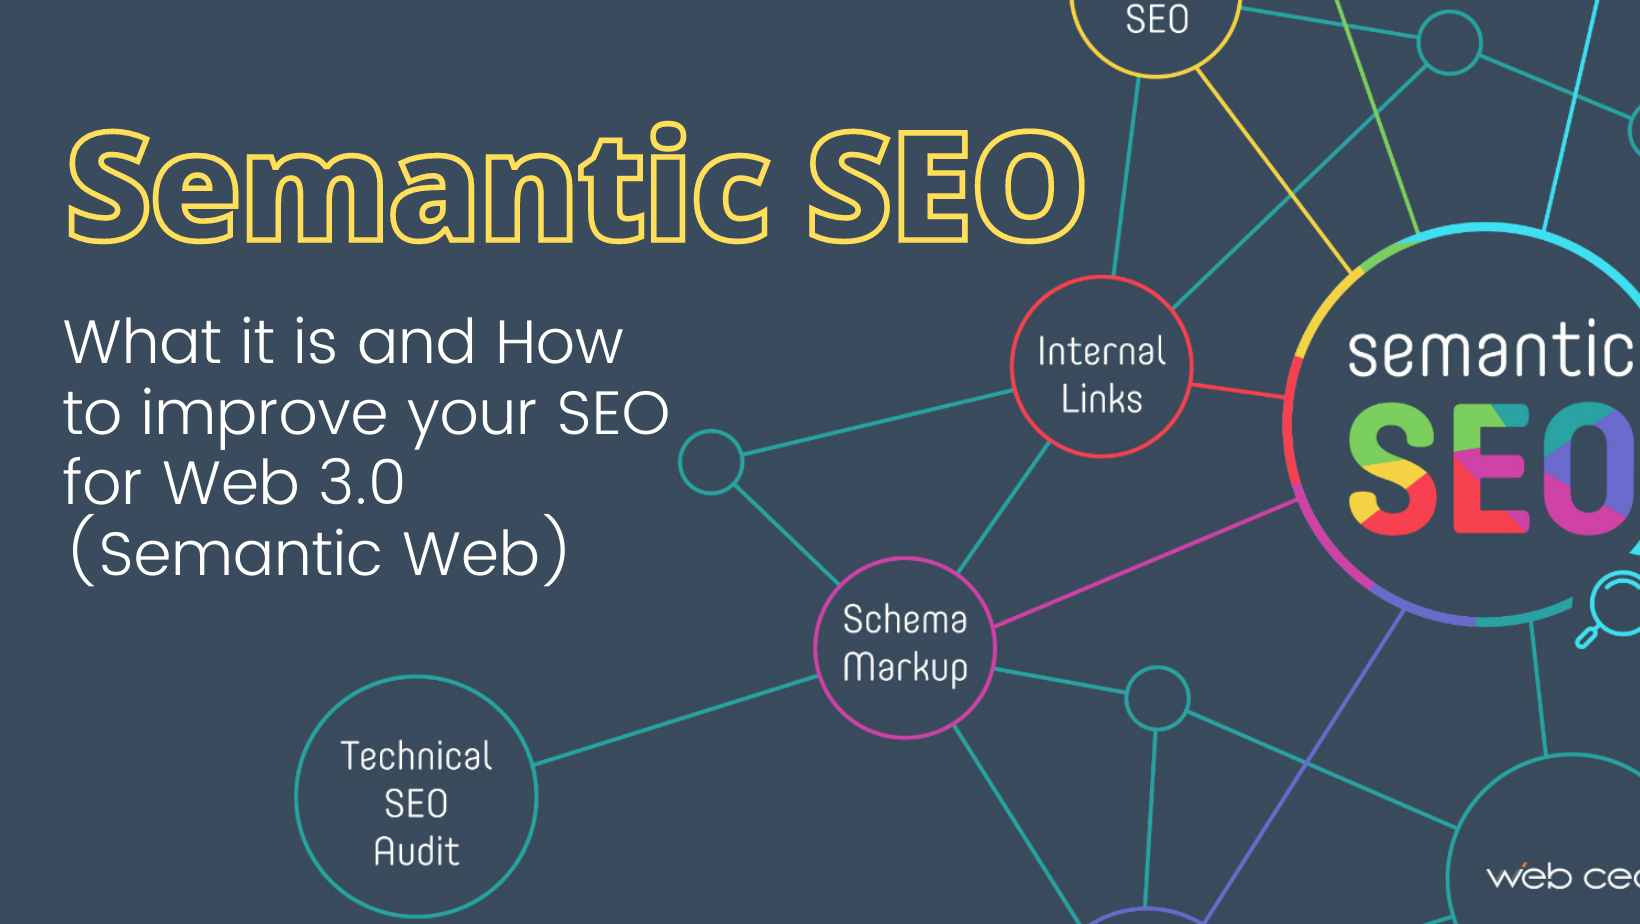 Semantic SEO - improve SEO strategy for Web 3.0 (Semantic Web)